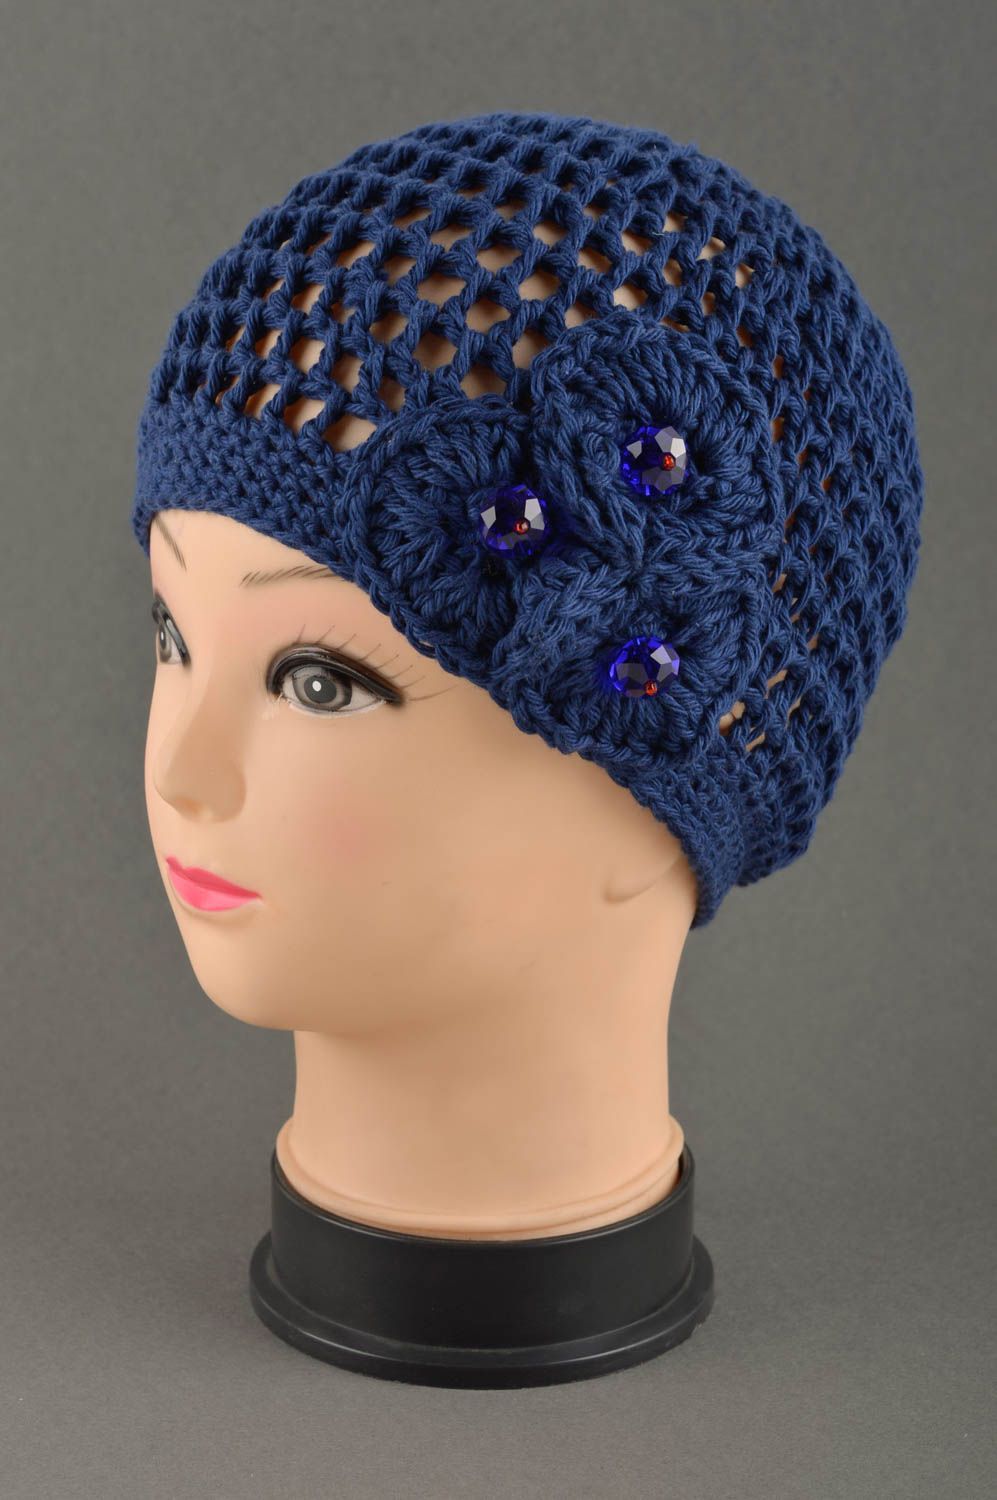 Handmade crochet hat ladies hats womens hats designer accessories gifts for her photo 1